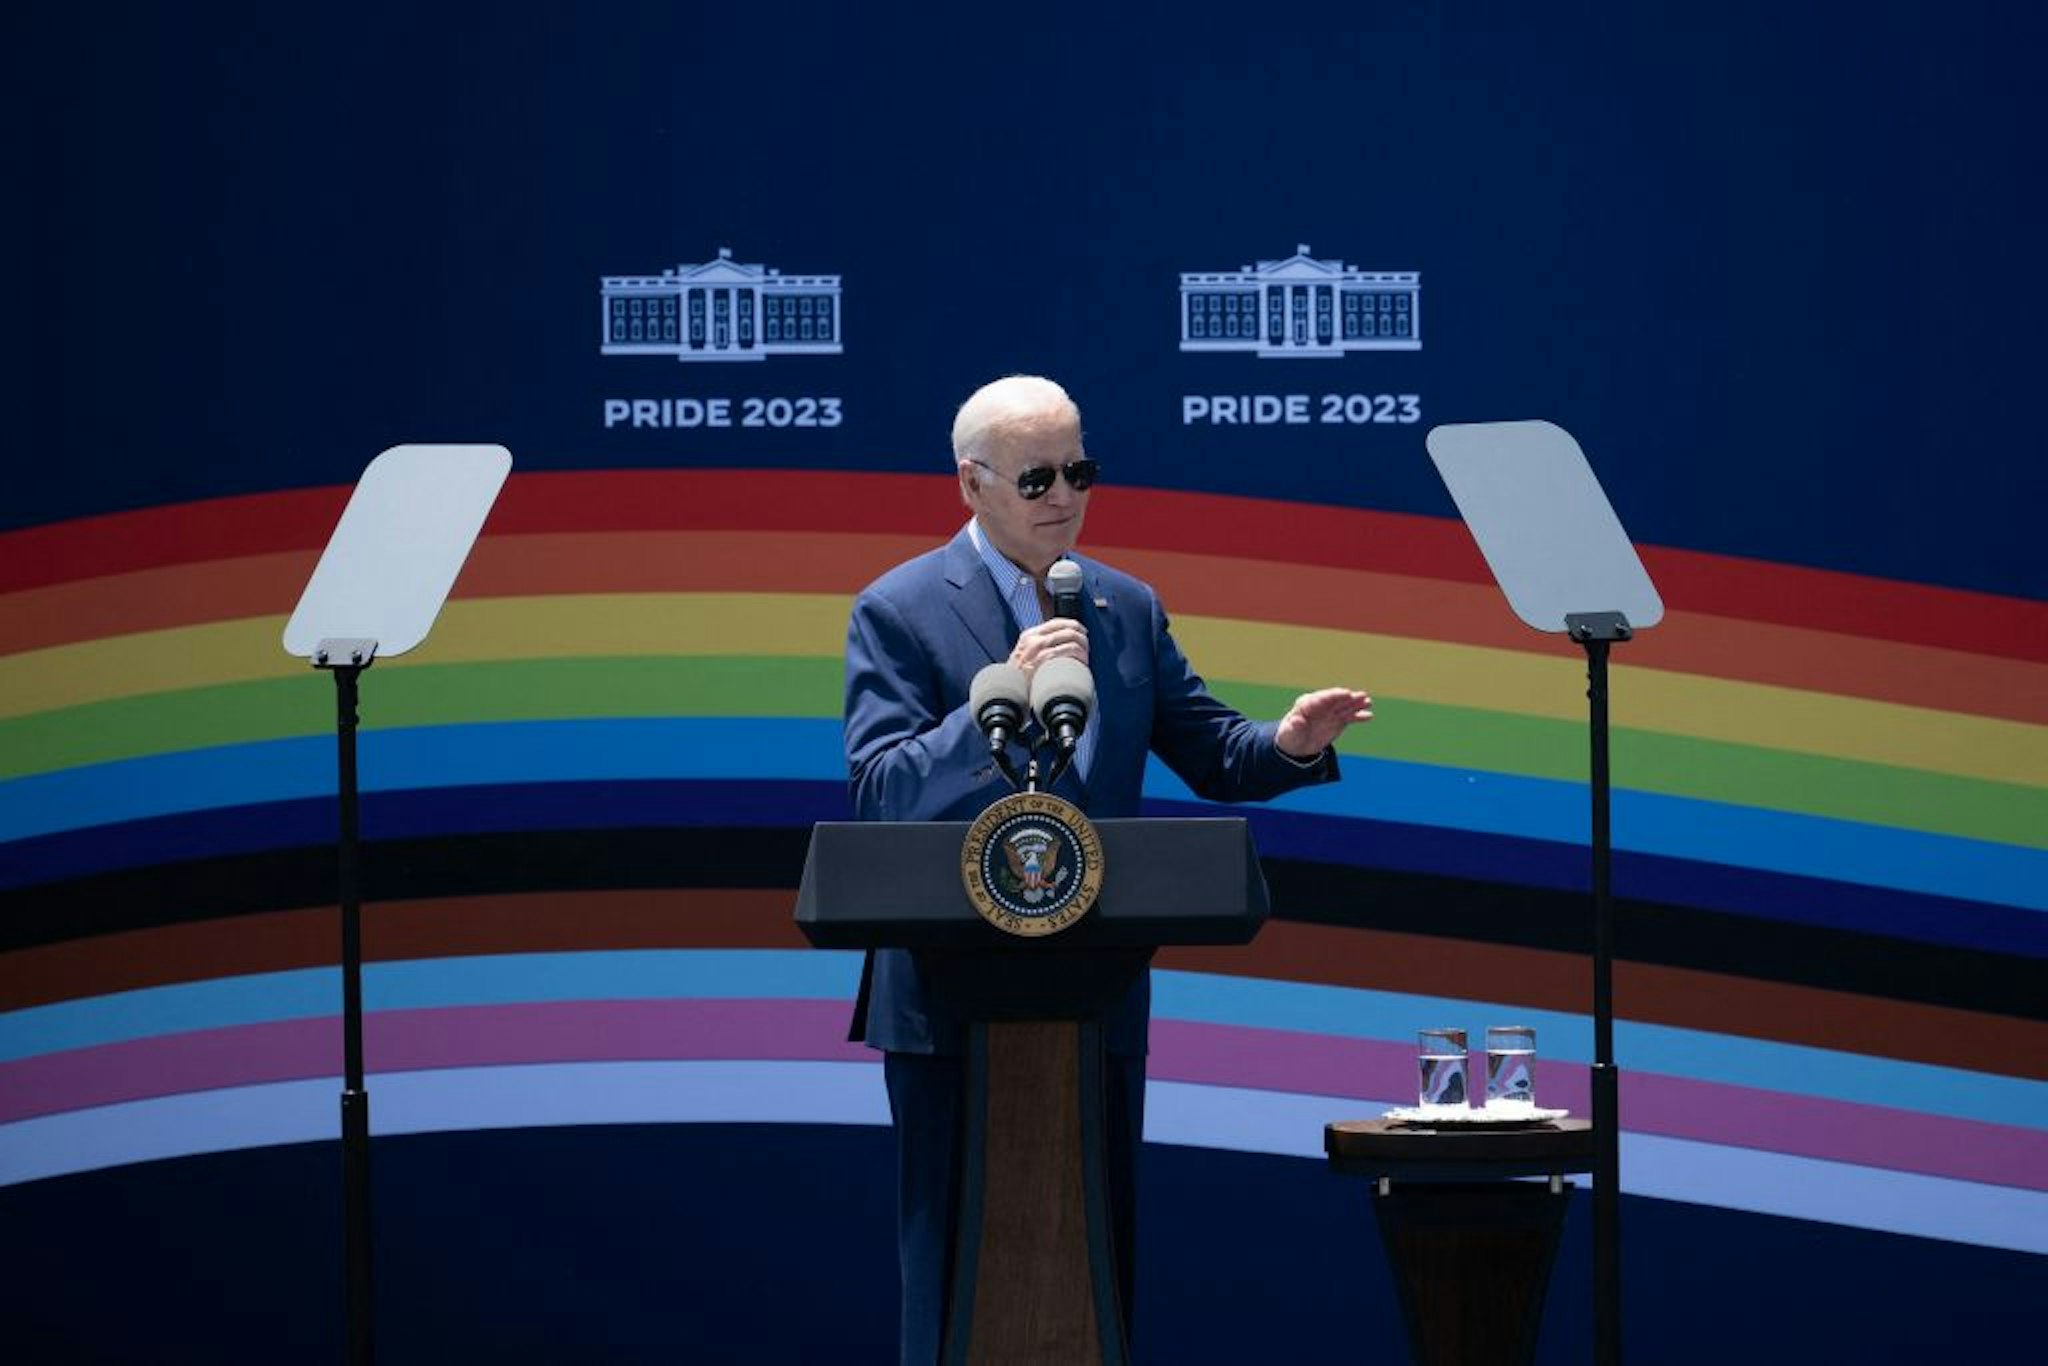 US President Joe Biden speaks during a Pride celebration on the South Lawn of the White House in Washington, DC, on June 10, 2023. (Photo by Brendan Smialowski / AFP)